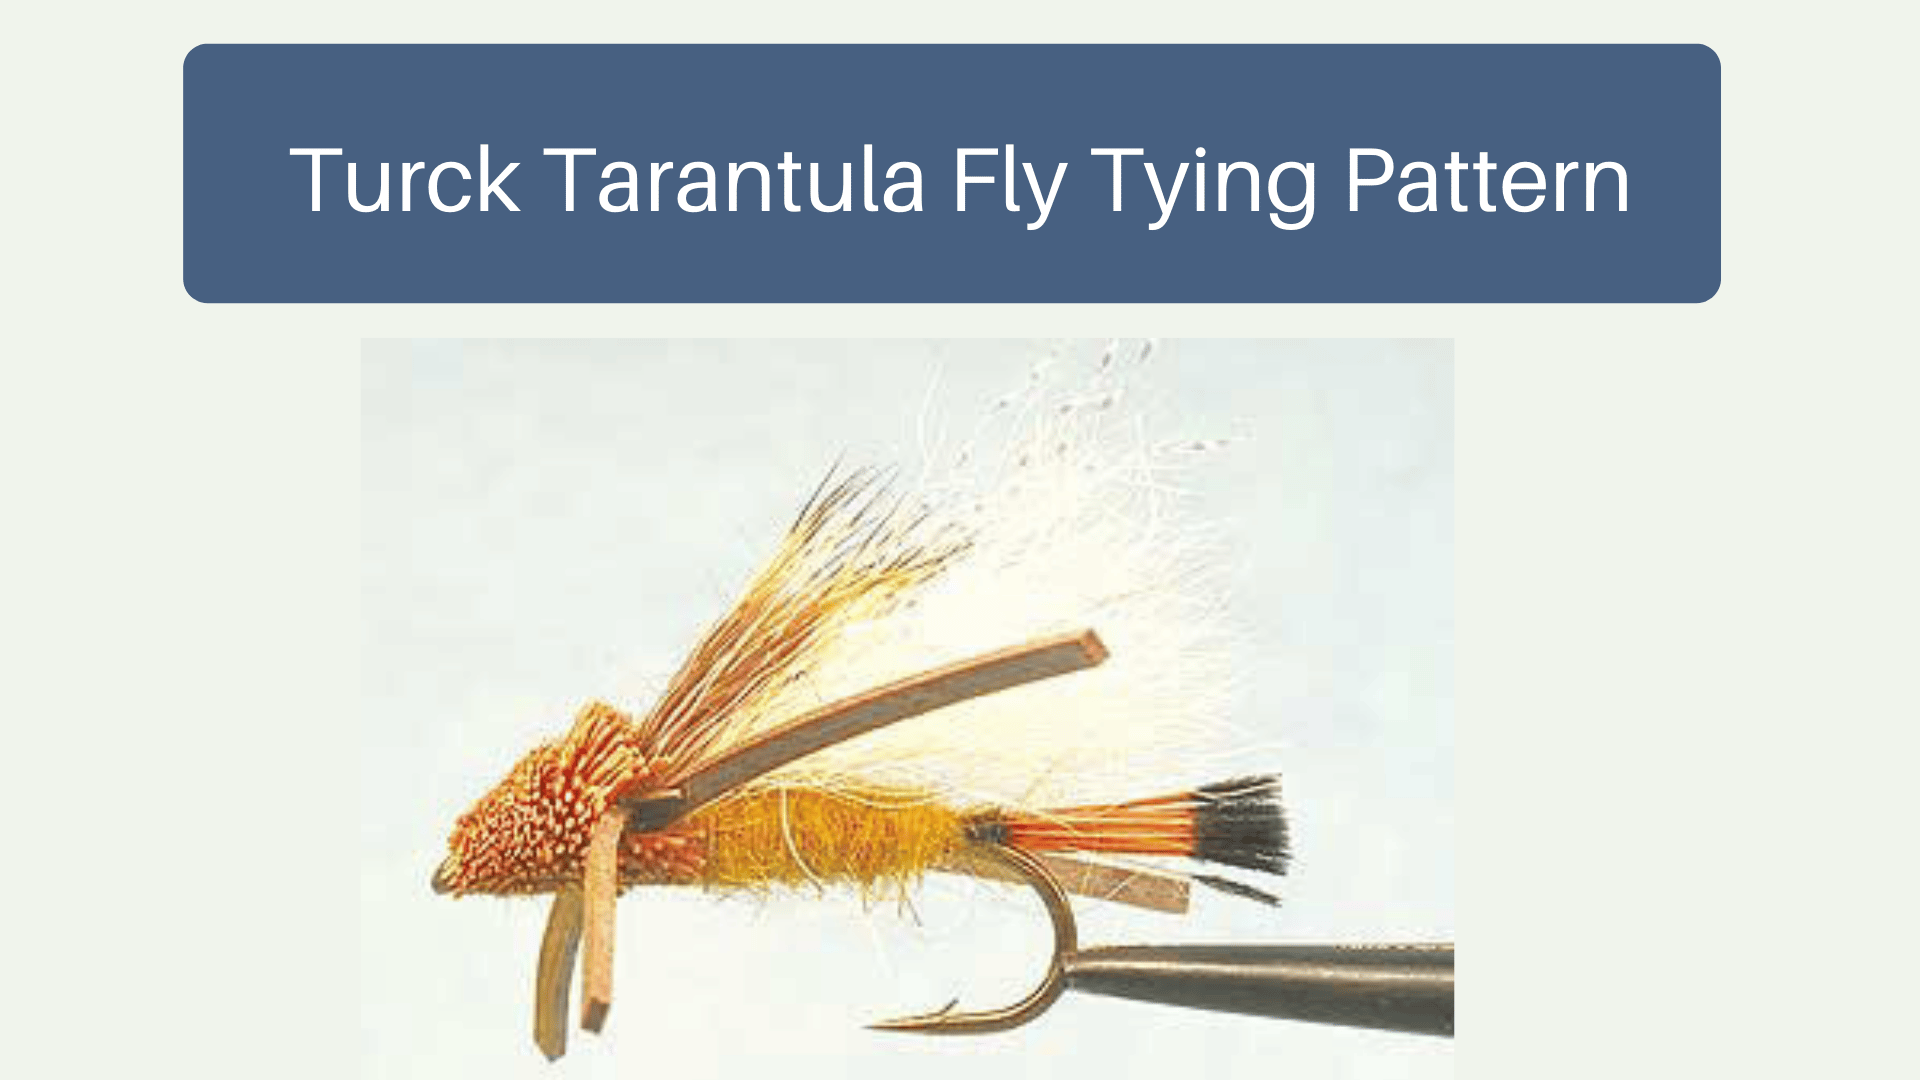 Turck Tarantula Fly Tying Pattern